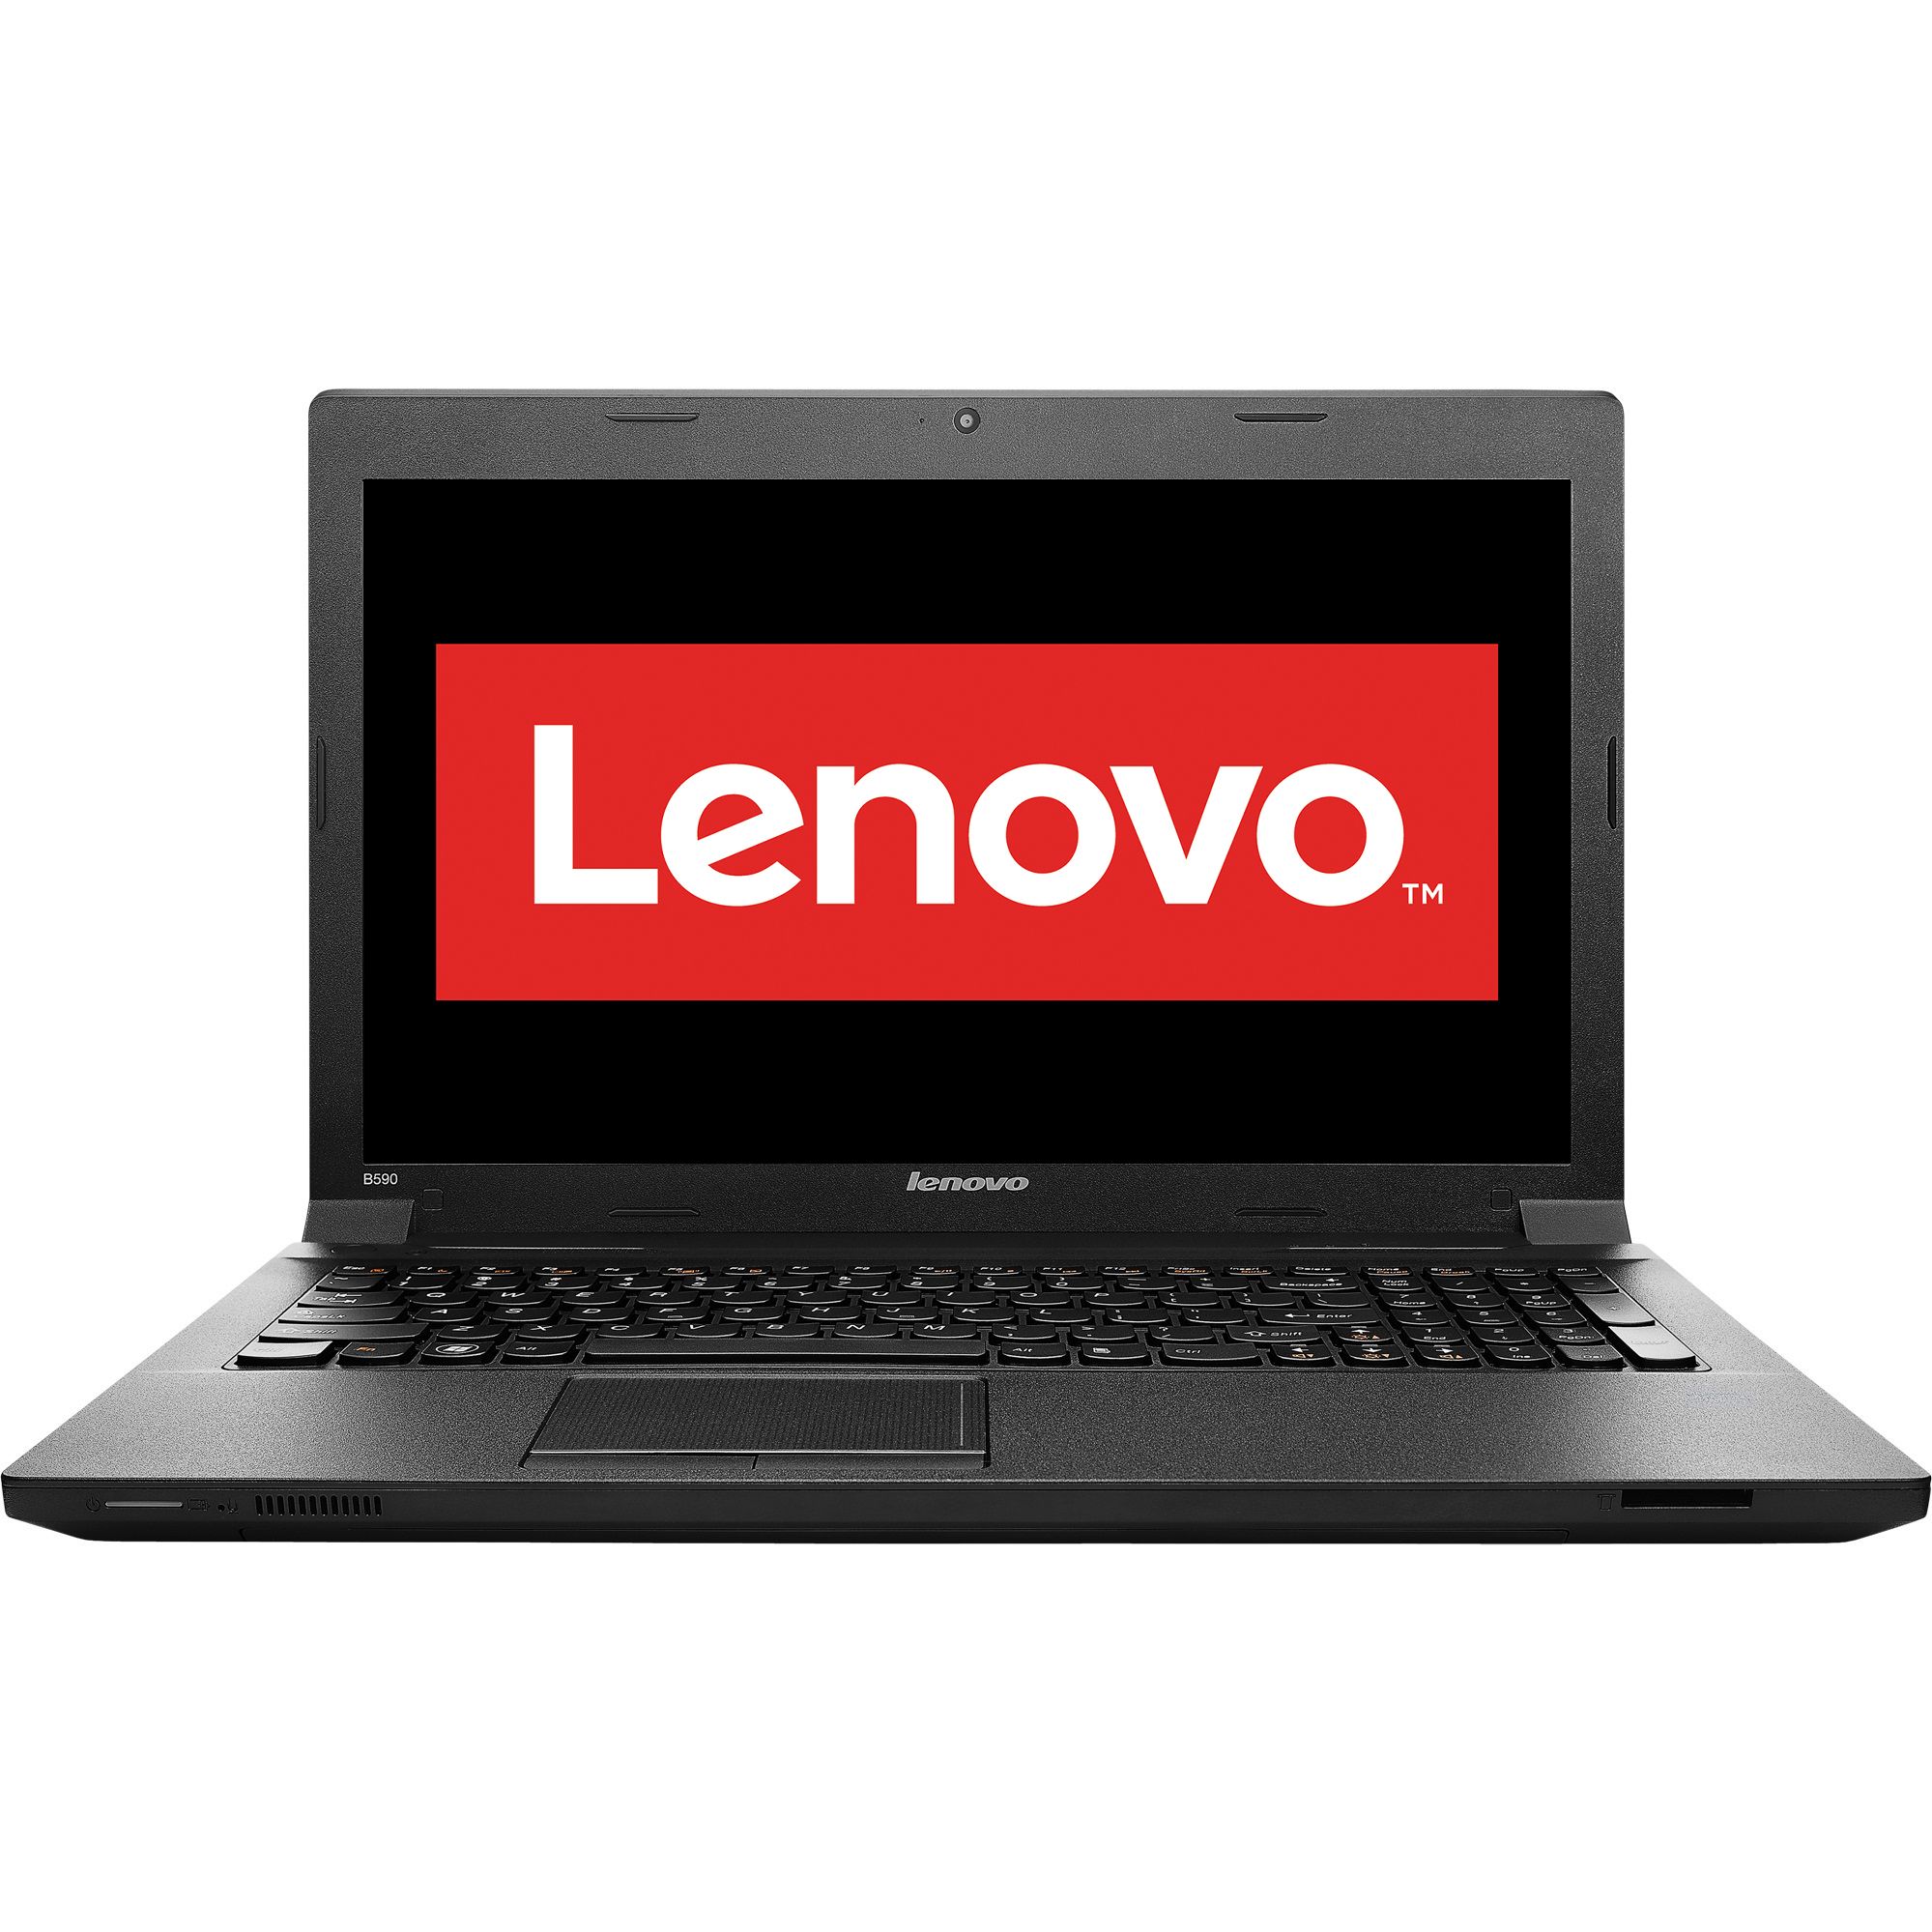 Laptop Lenovo B590, Intel Core i3-3110M 2.40GHz, 4GB DDR3, 500GB SATA, DVD-RW, 15.6 Inch, Tastatura Numerica, Webcam